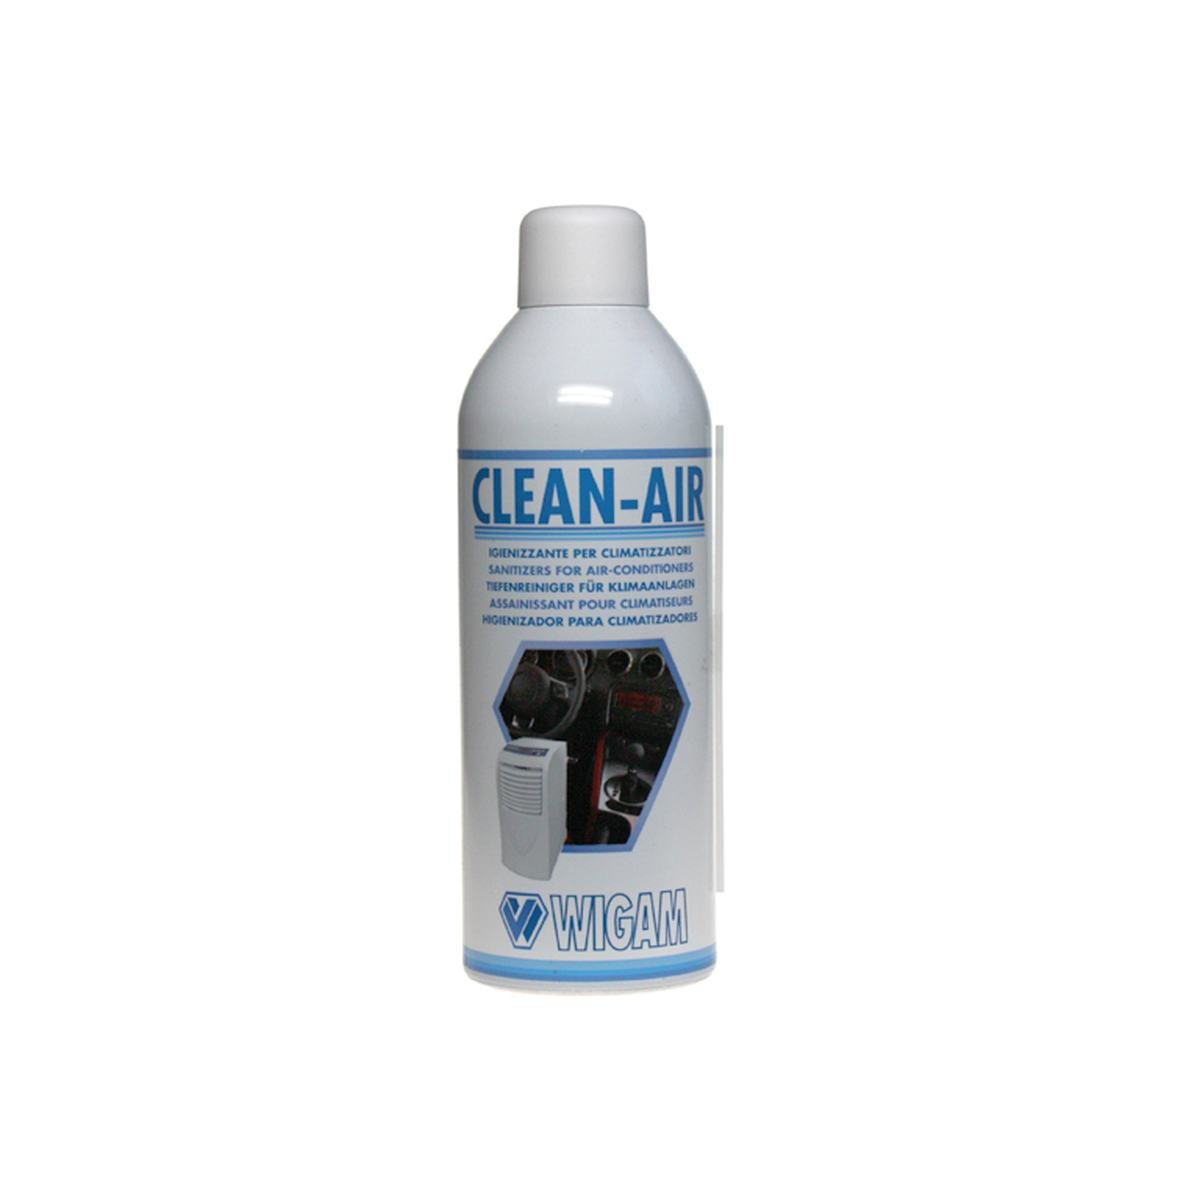 Clean-air desinfektionsspray i dåse med 400 ml.